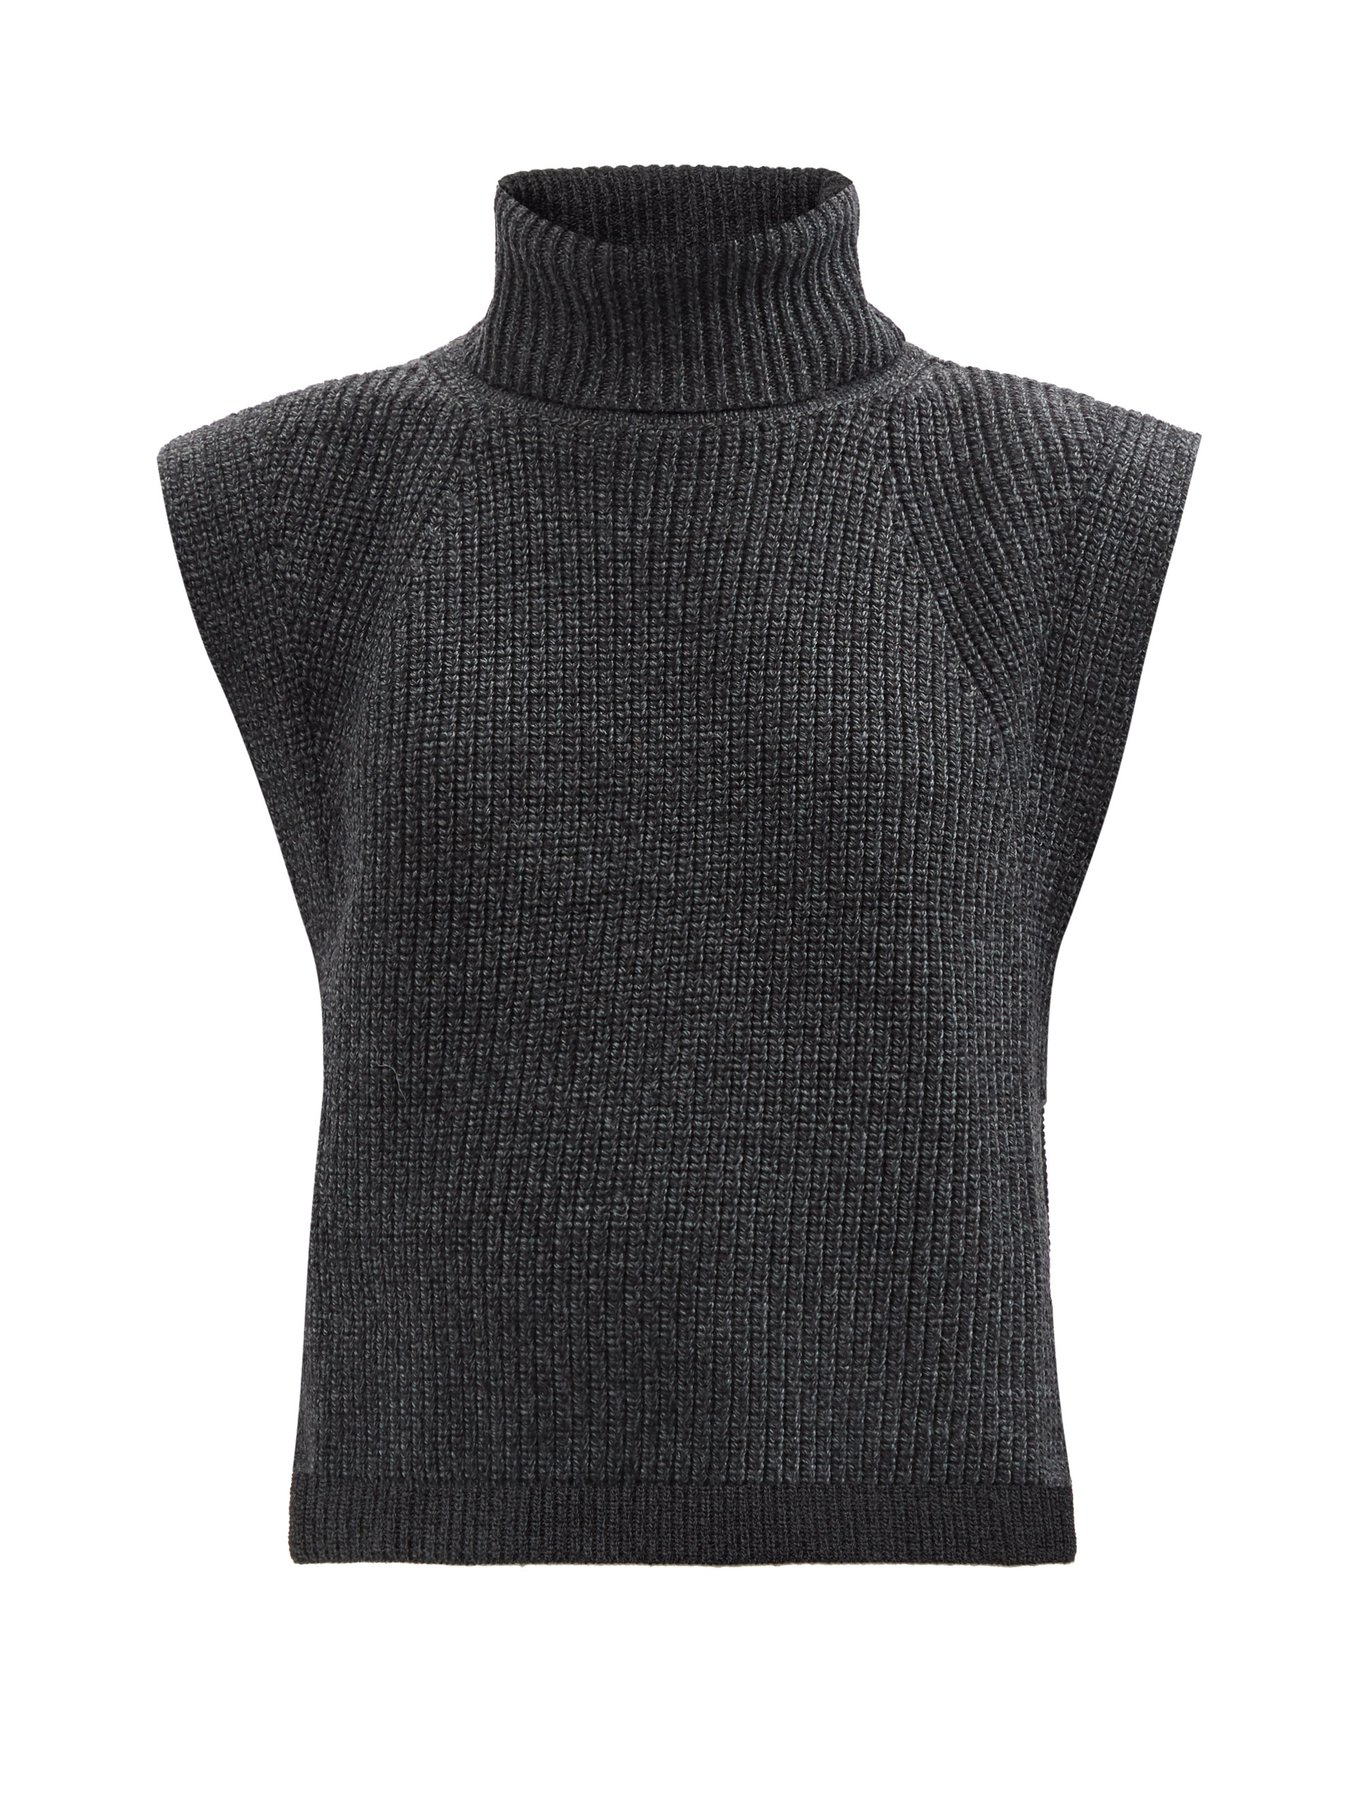 Grey Megan roll-neck merino-wool sweater vest | Isabel Étoile | US